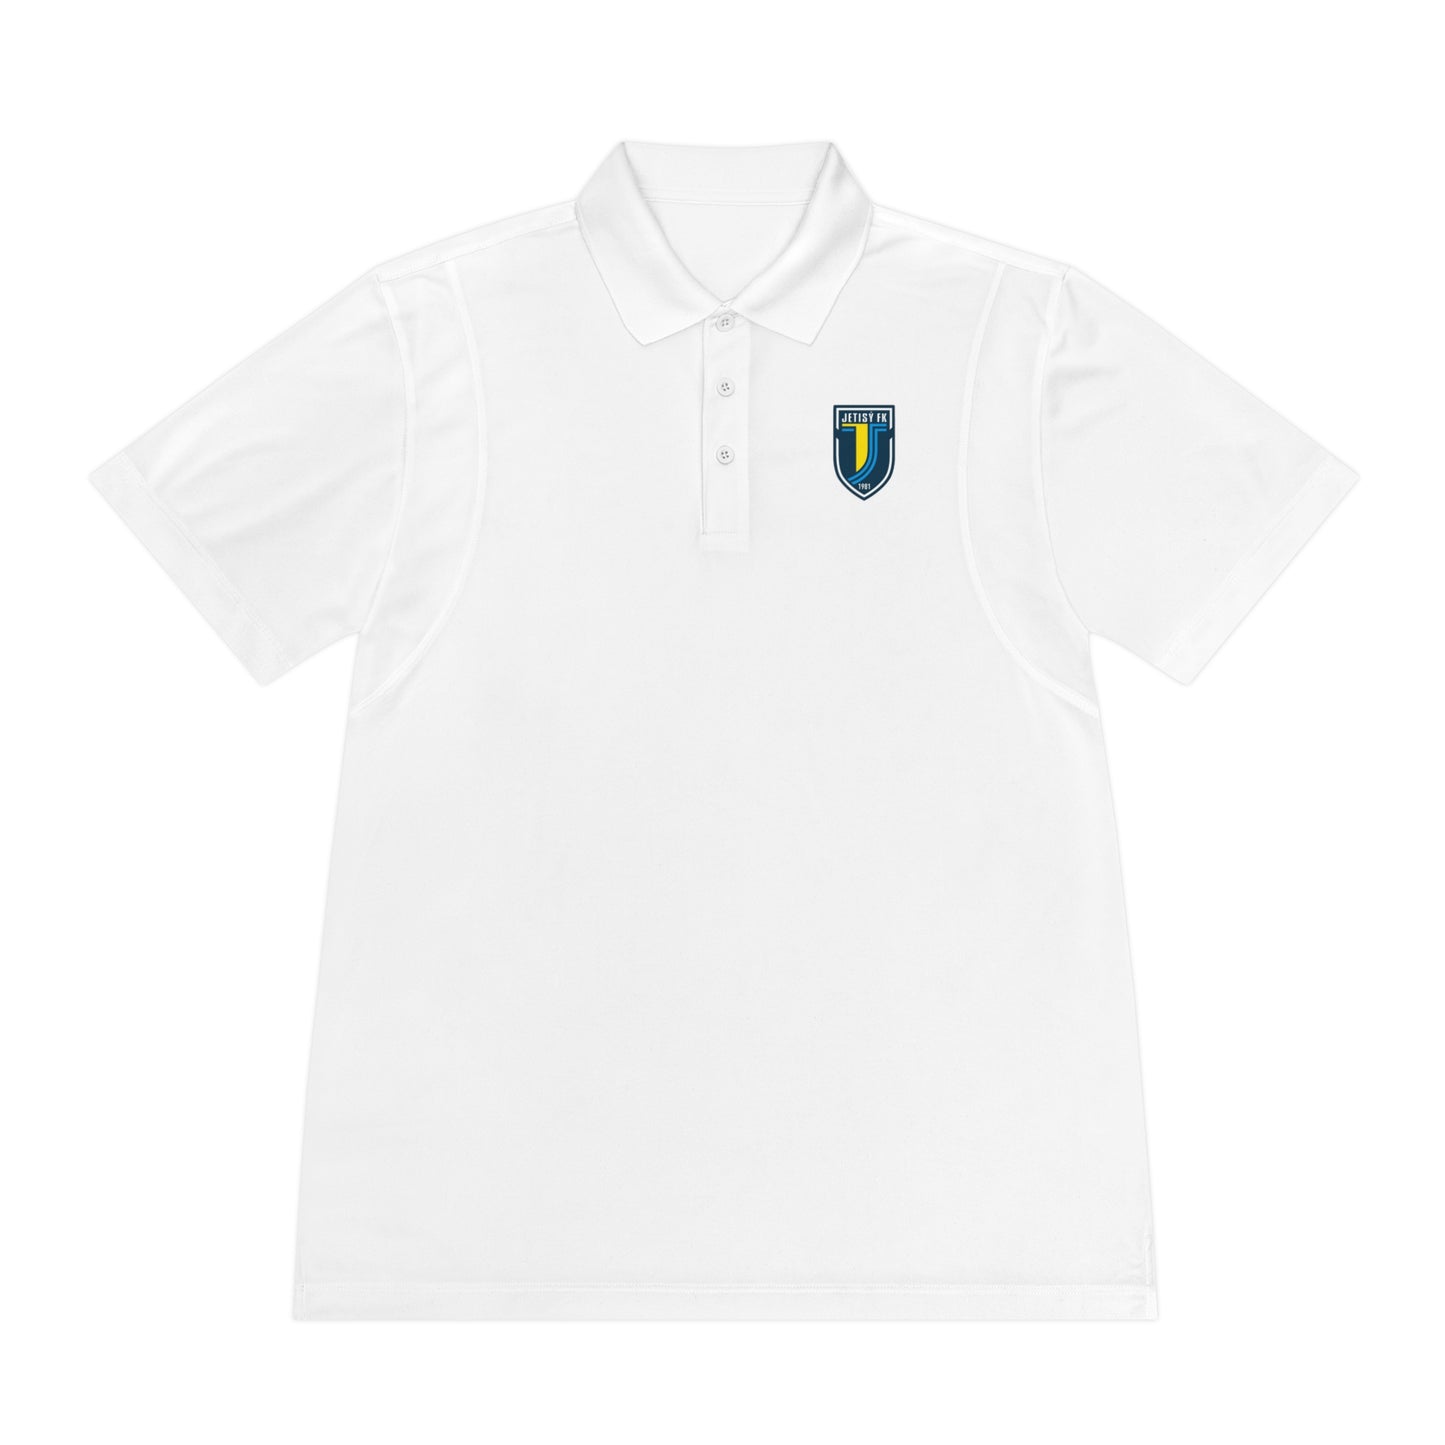 FK Zhetysu Taldykorgan Men's Sport Polo Shirt